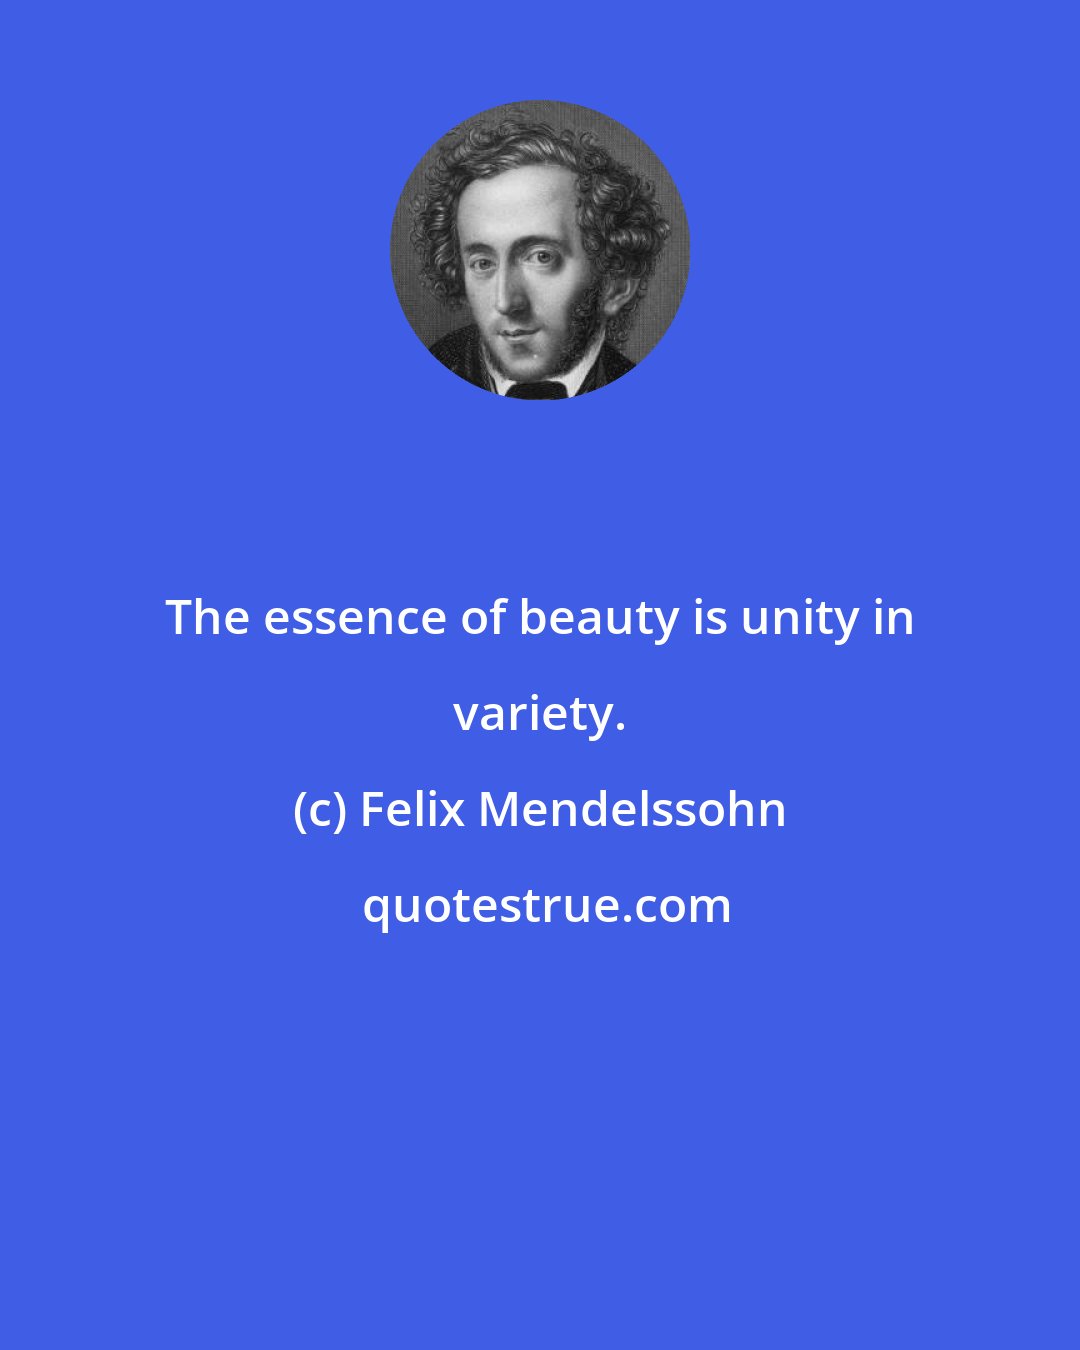 Felix Mendelssohn: The essence of beauty is unity in variety.